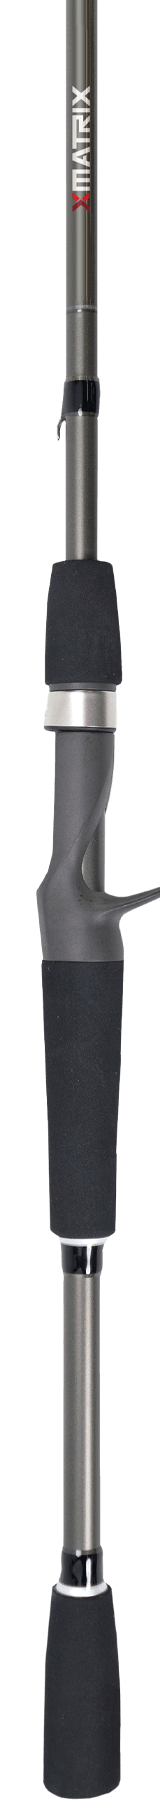 Douglas DXC Casting Rod · 7'0" · Medium